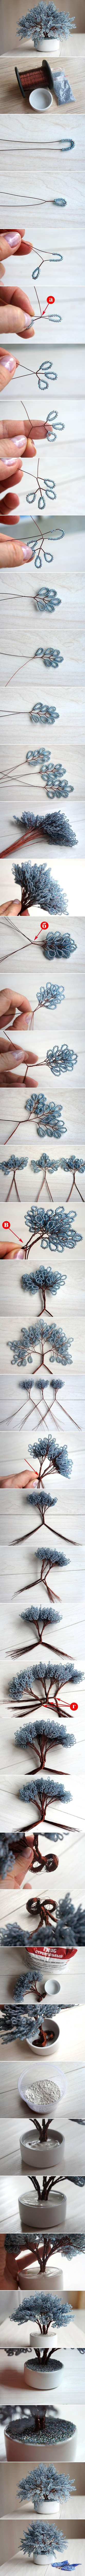 DIY Miniature Tree of Beads Step by Step